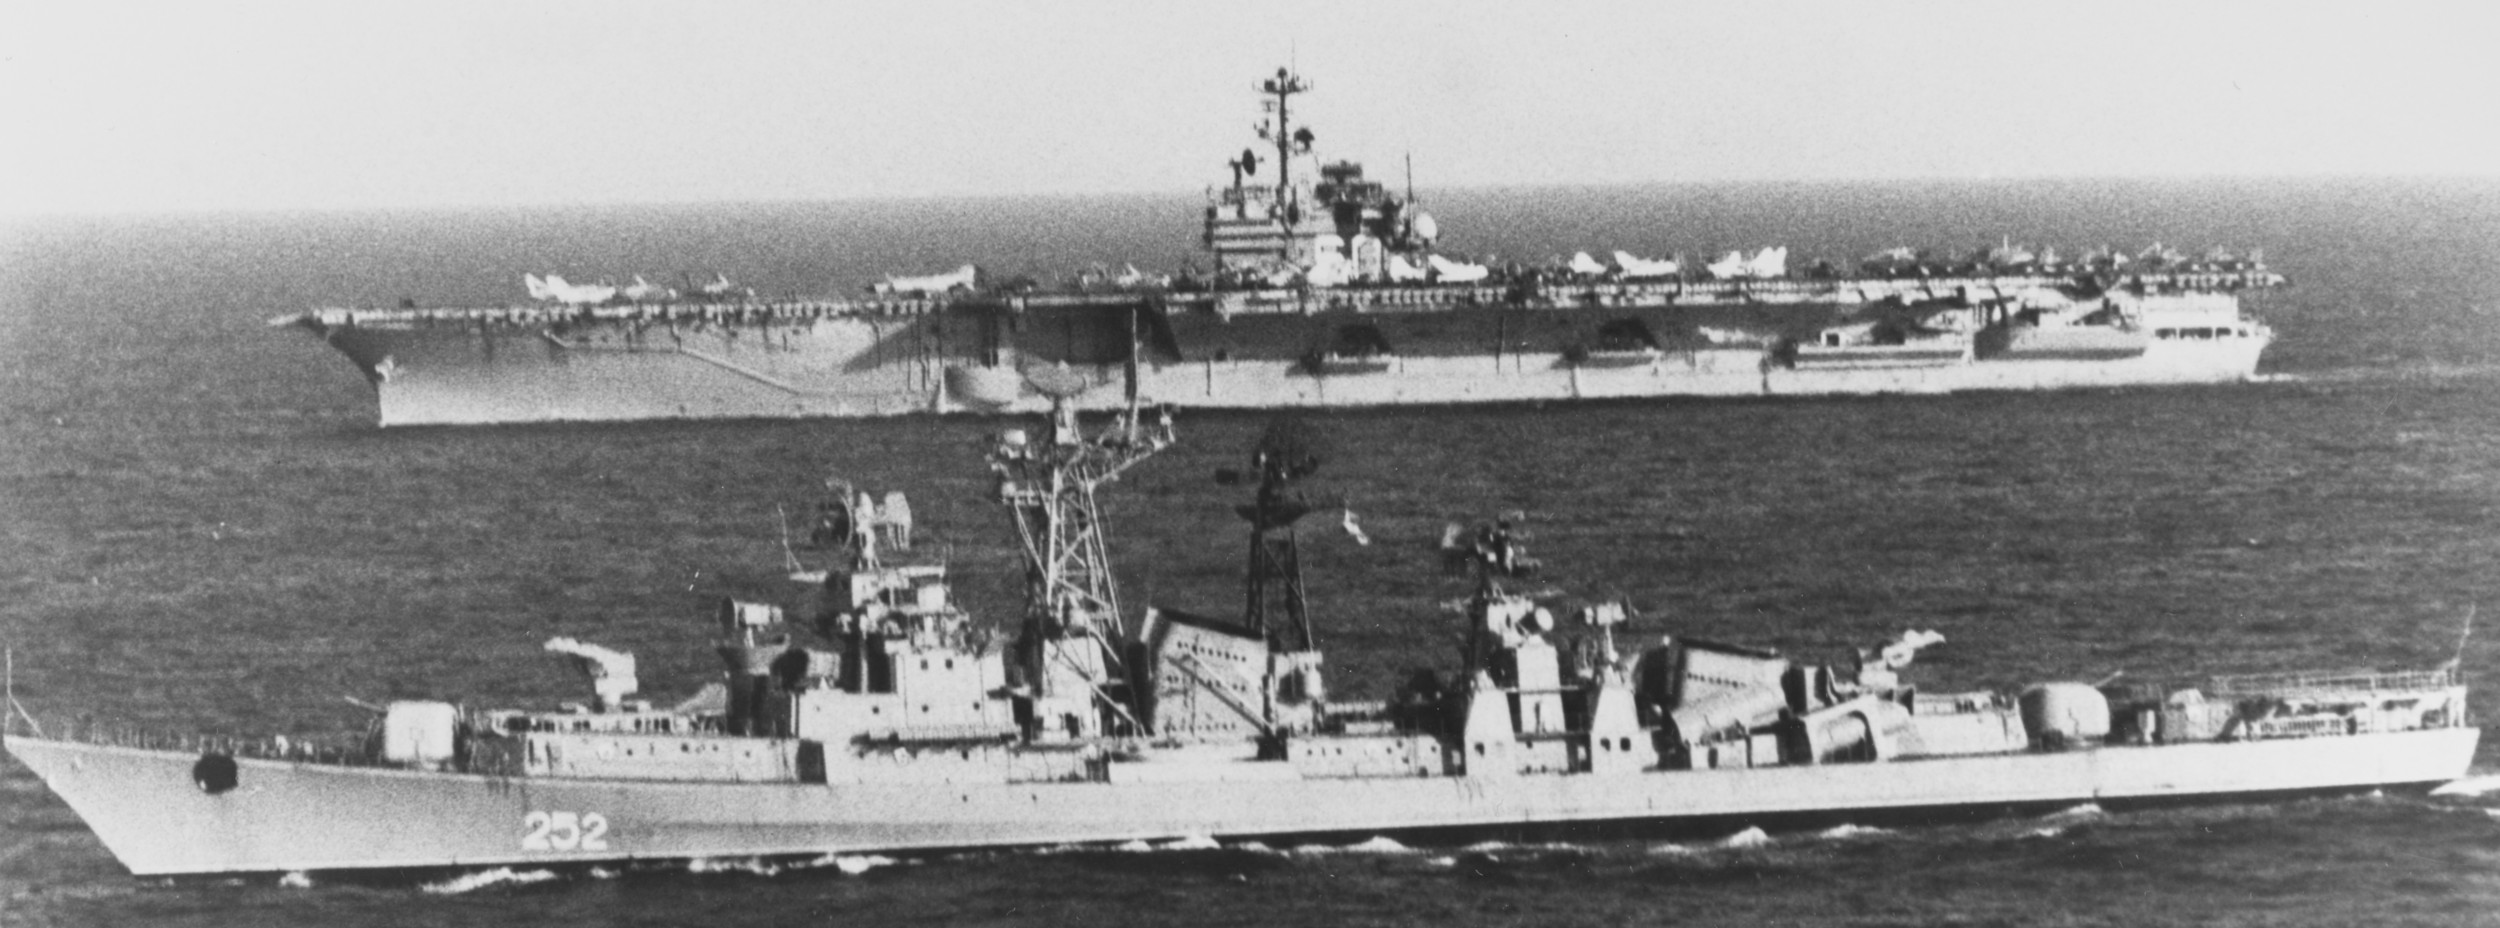 cv-60 uss saratoga forrestal class aircraft carrier us navy soviet destroyer smely 252 1979